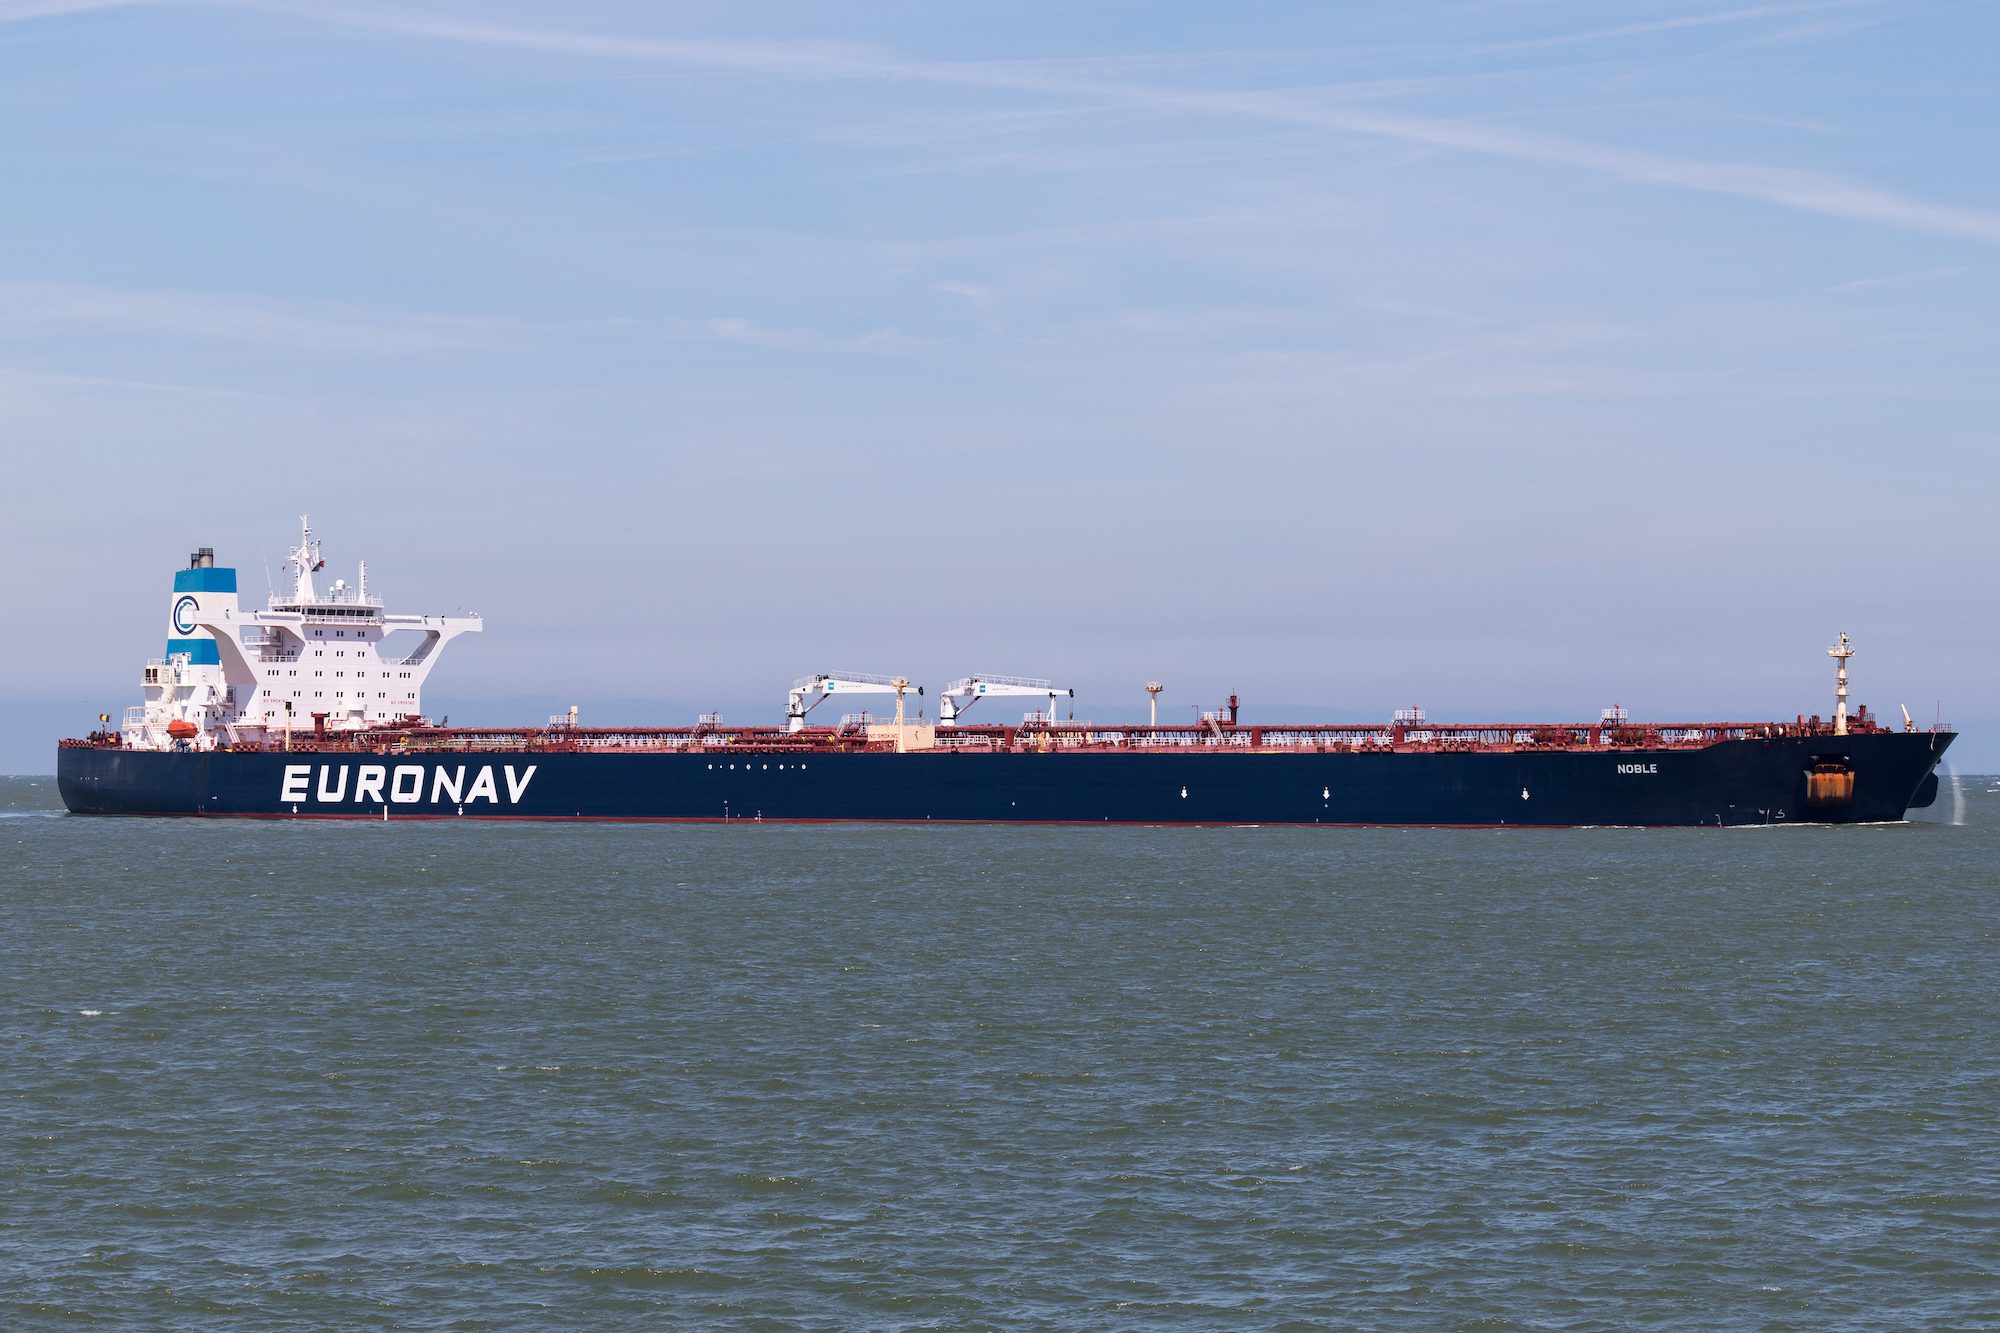 Euronav tanker at sea